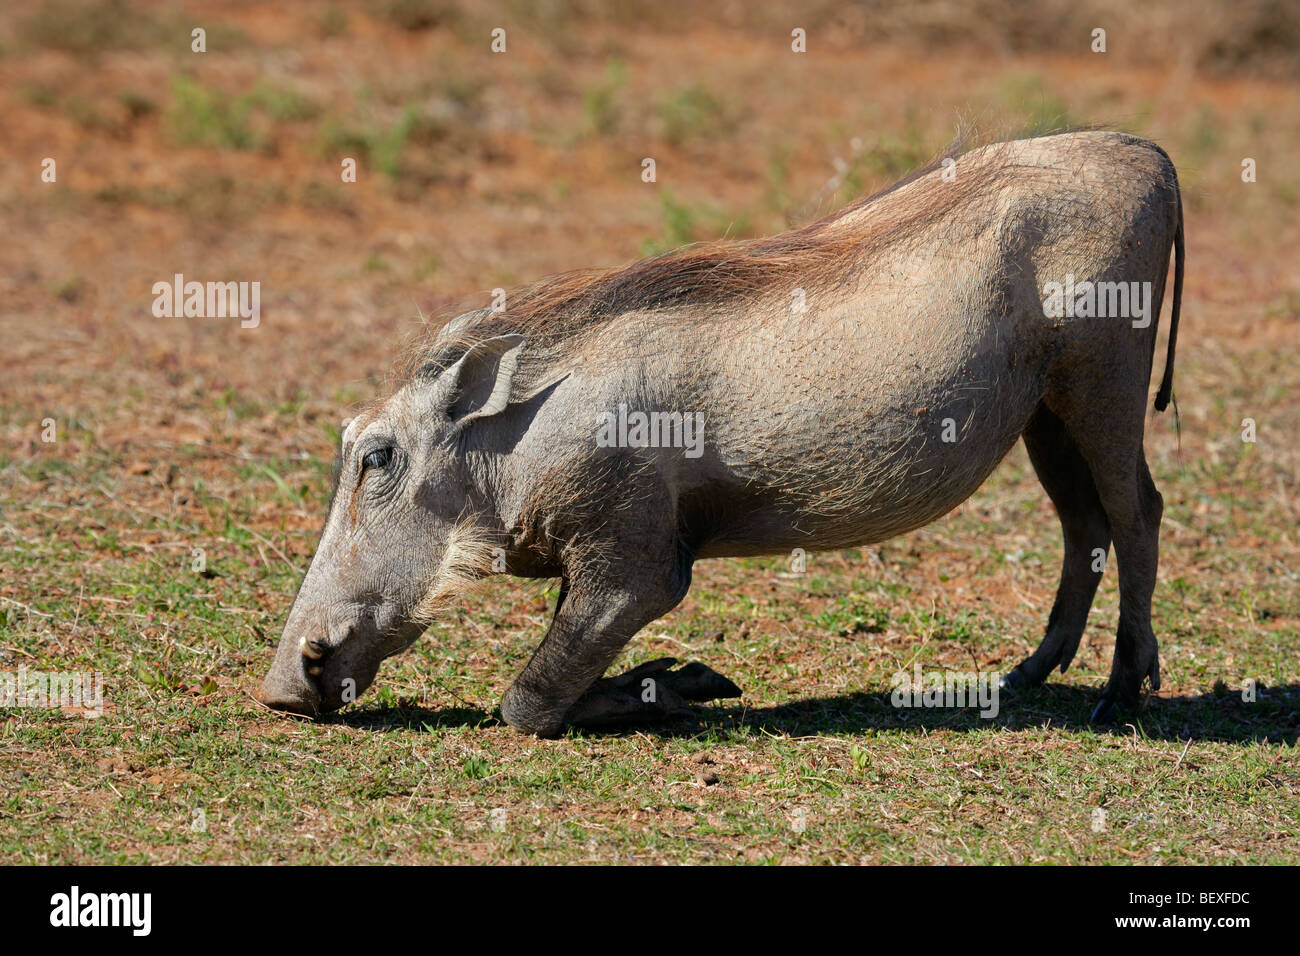 A warthog (Phacochoerus africanus) feeding on grass, South Africa Stock Photo